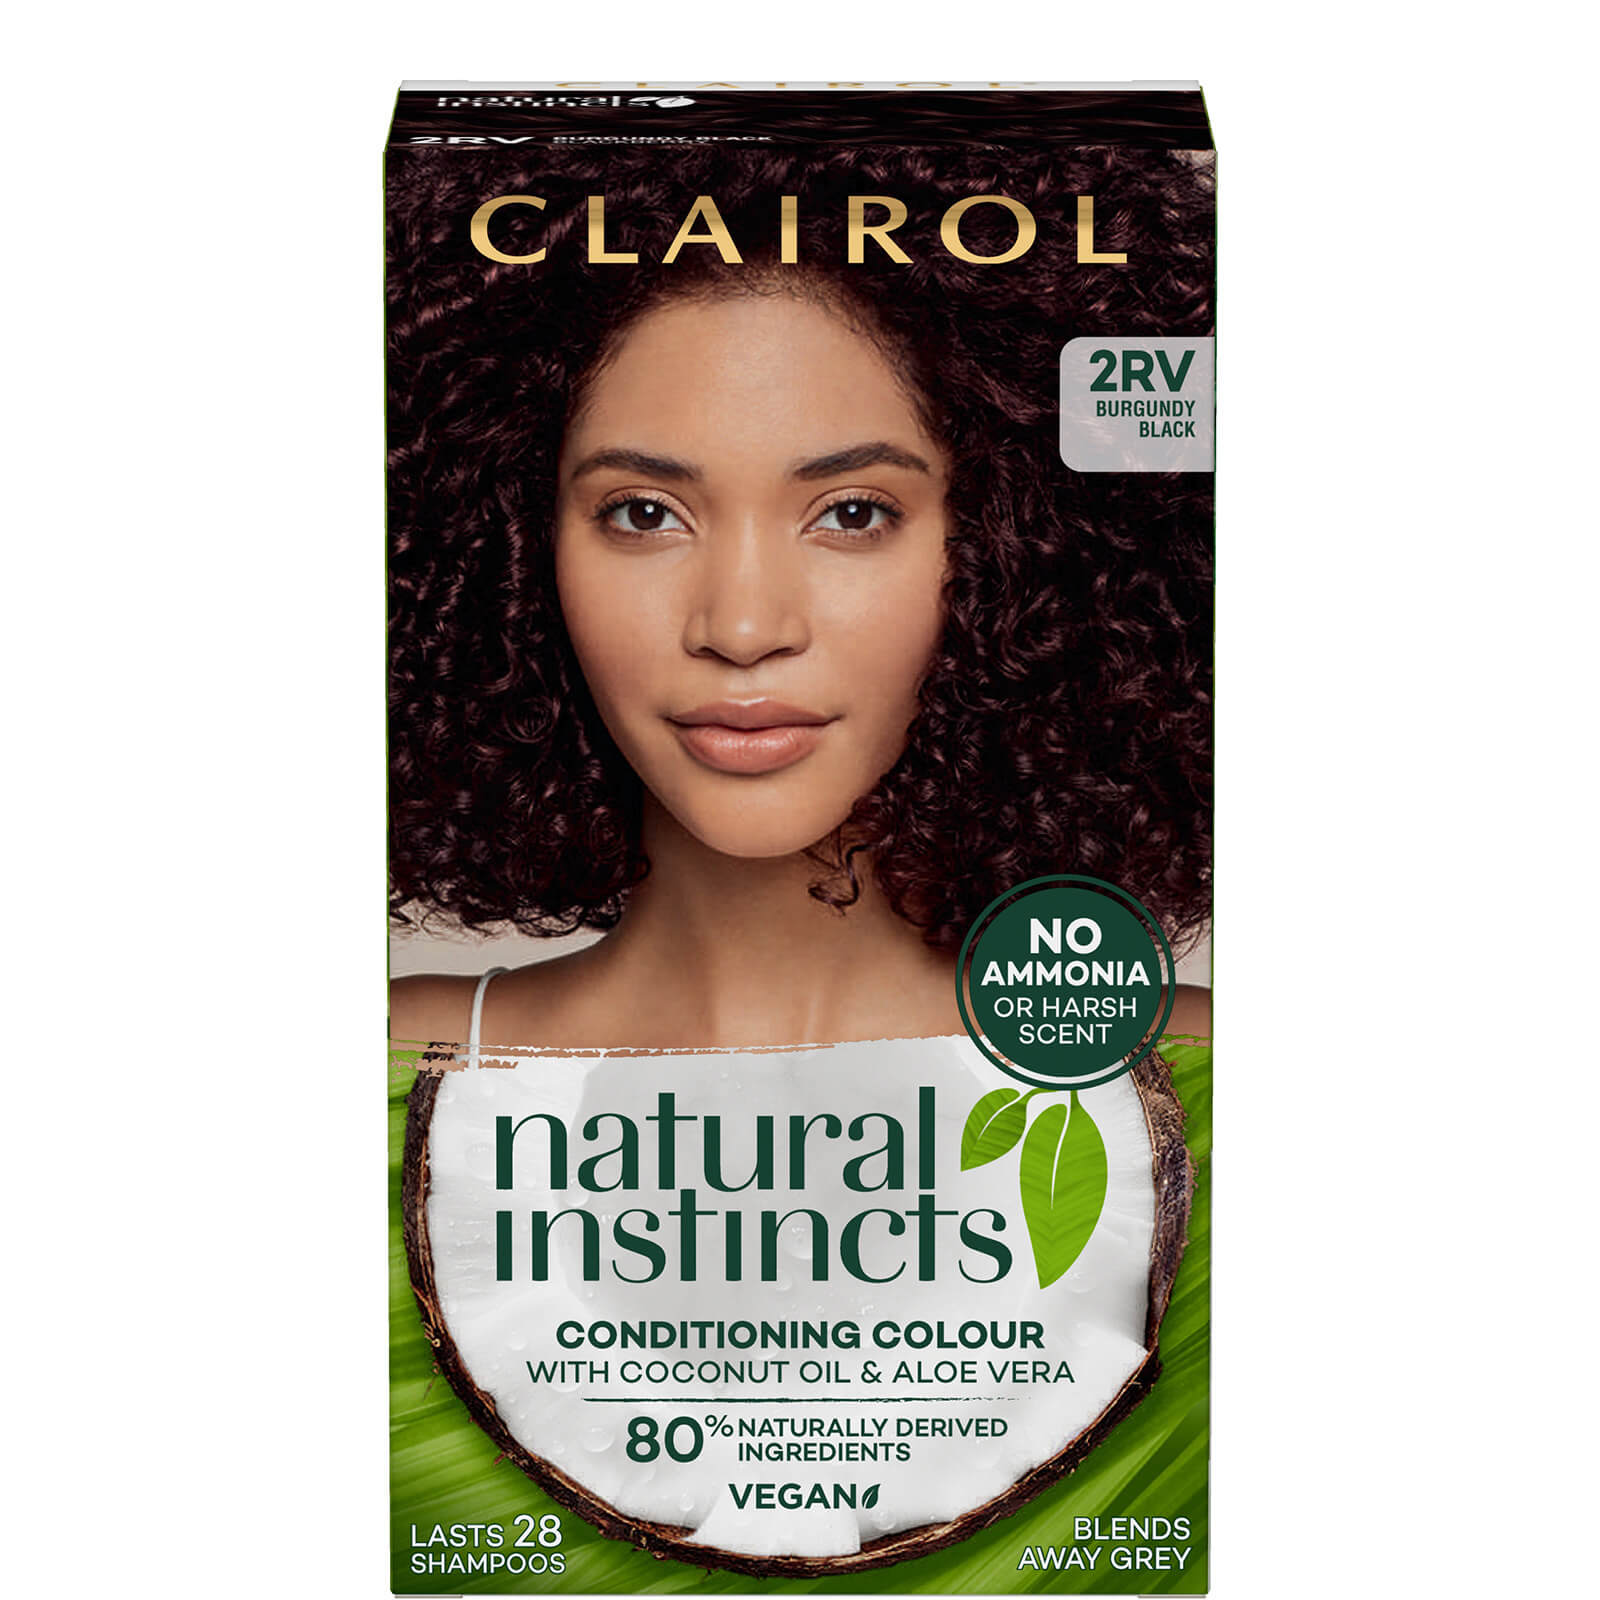 Clairol Natural Instincts Semi-Permanent No Ammonia Vegan Hair Dye 177ml (Various Shades) - 2RV Burgundy Black